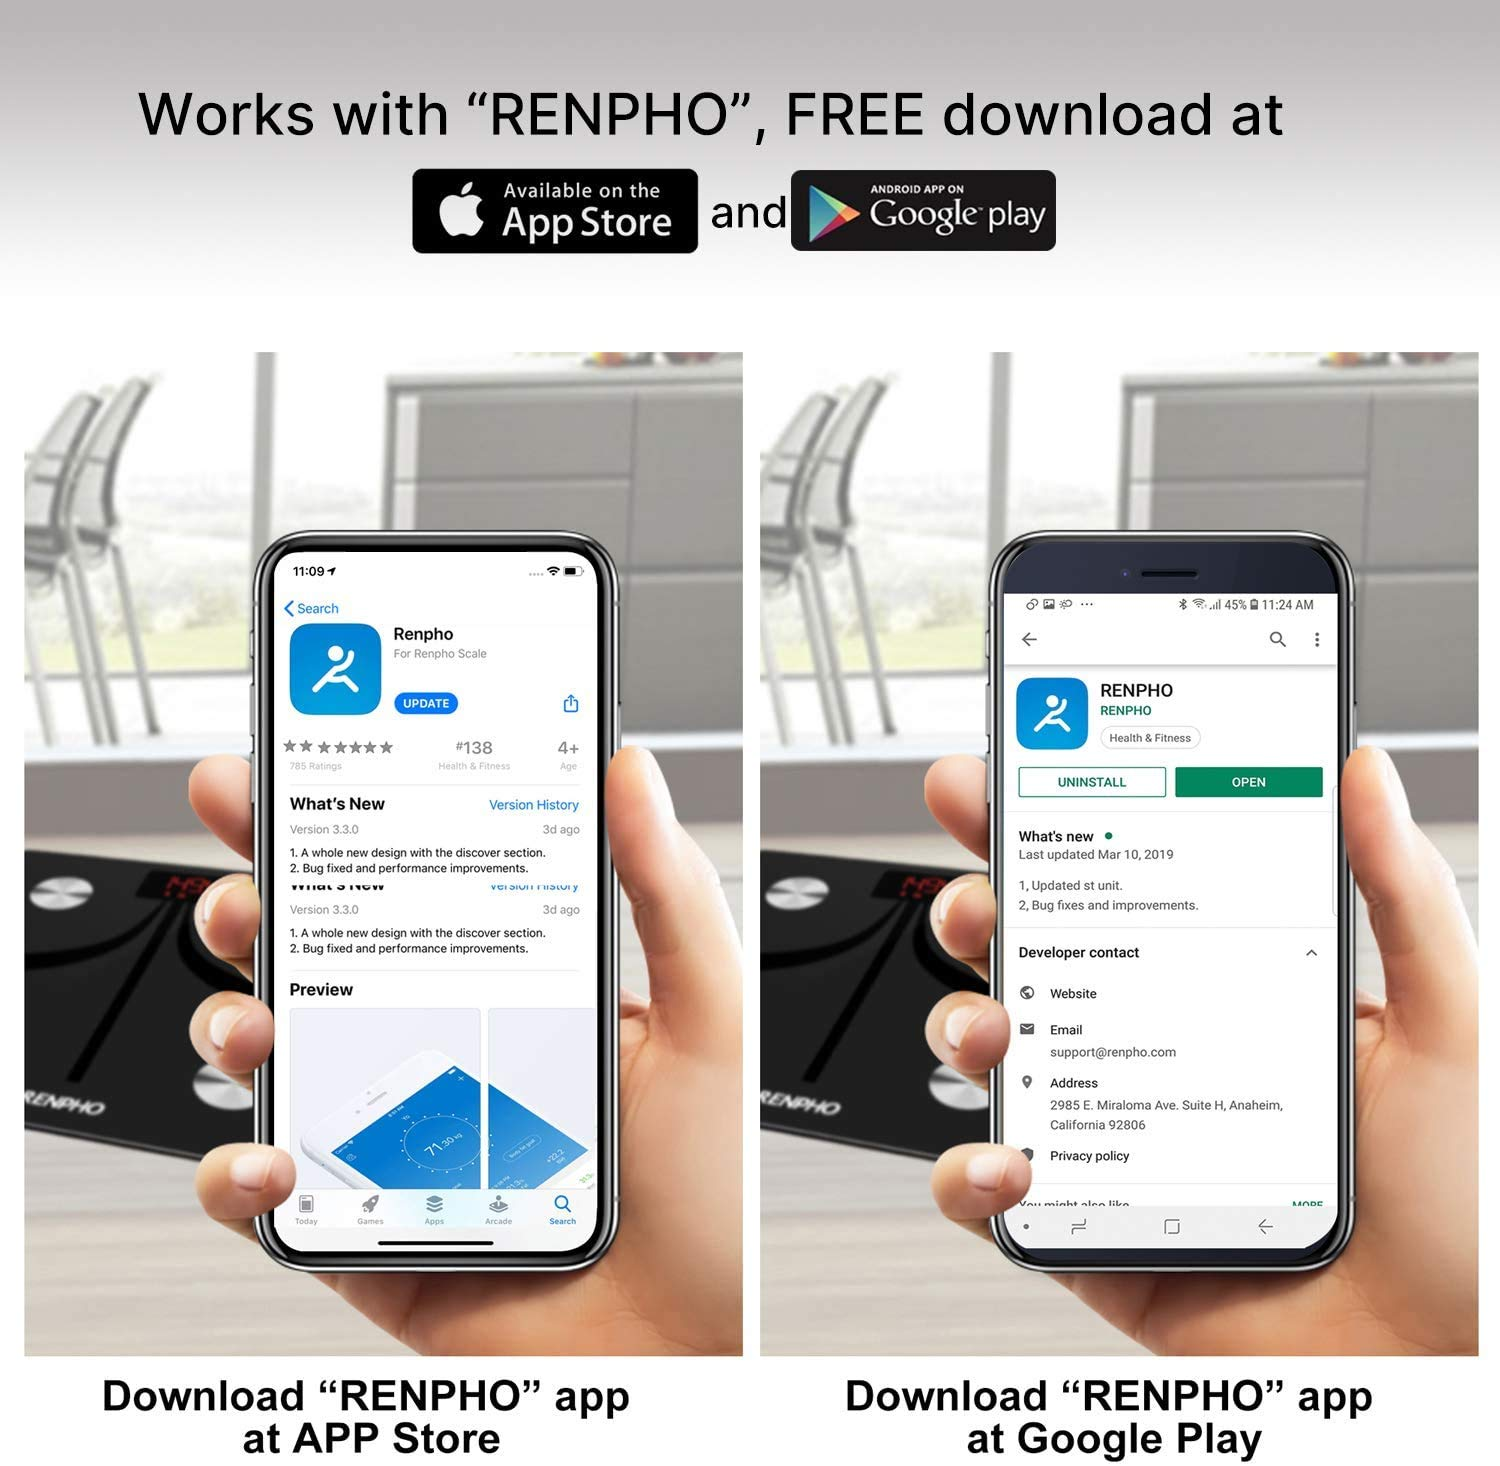 Bluetooth mit Körperanalysewaagen RENPHO App Personenwaage Körperfettwaage